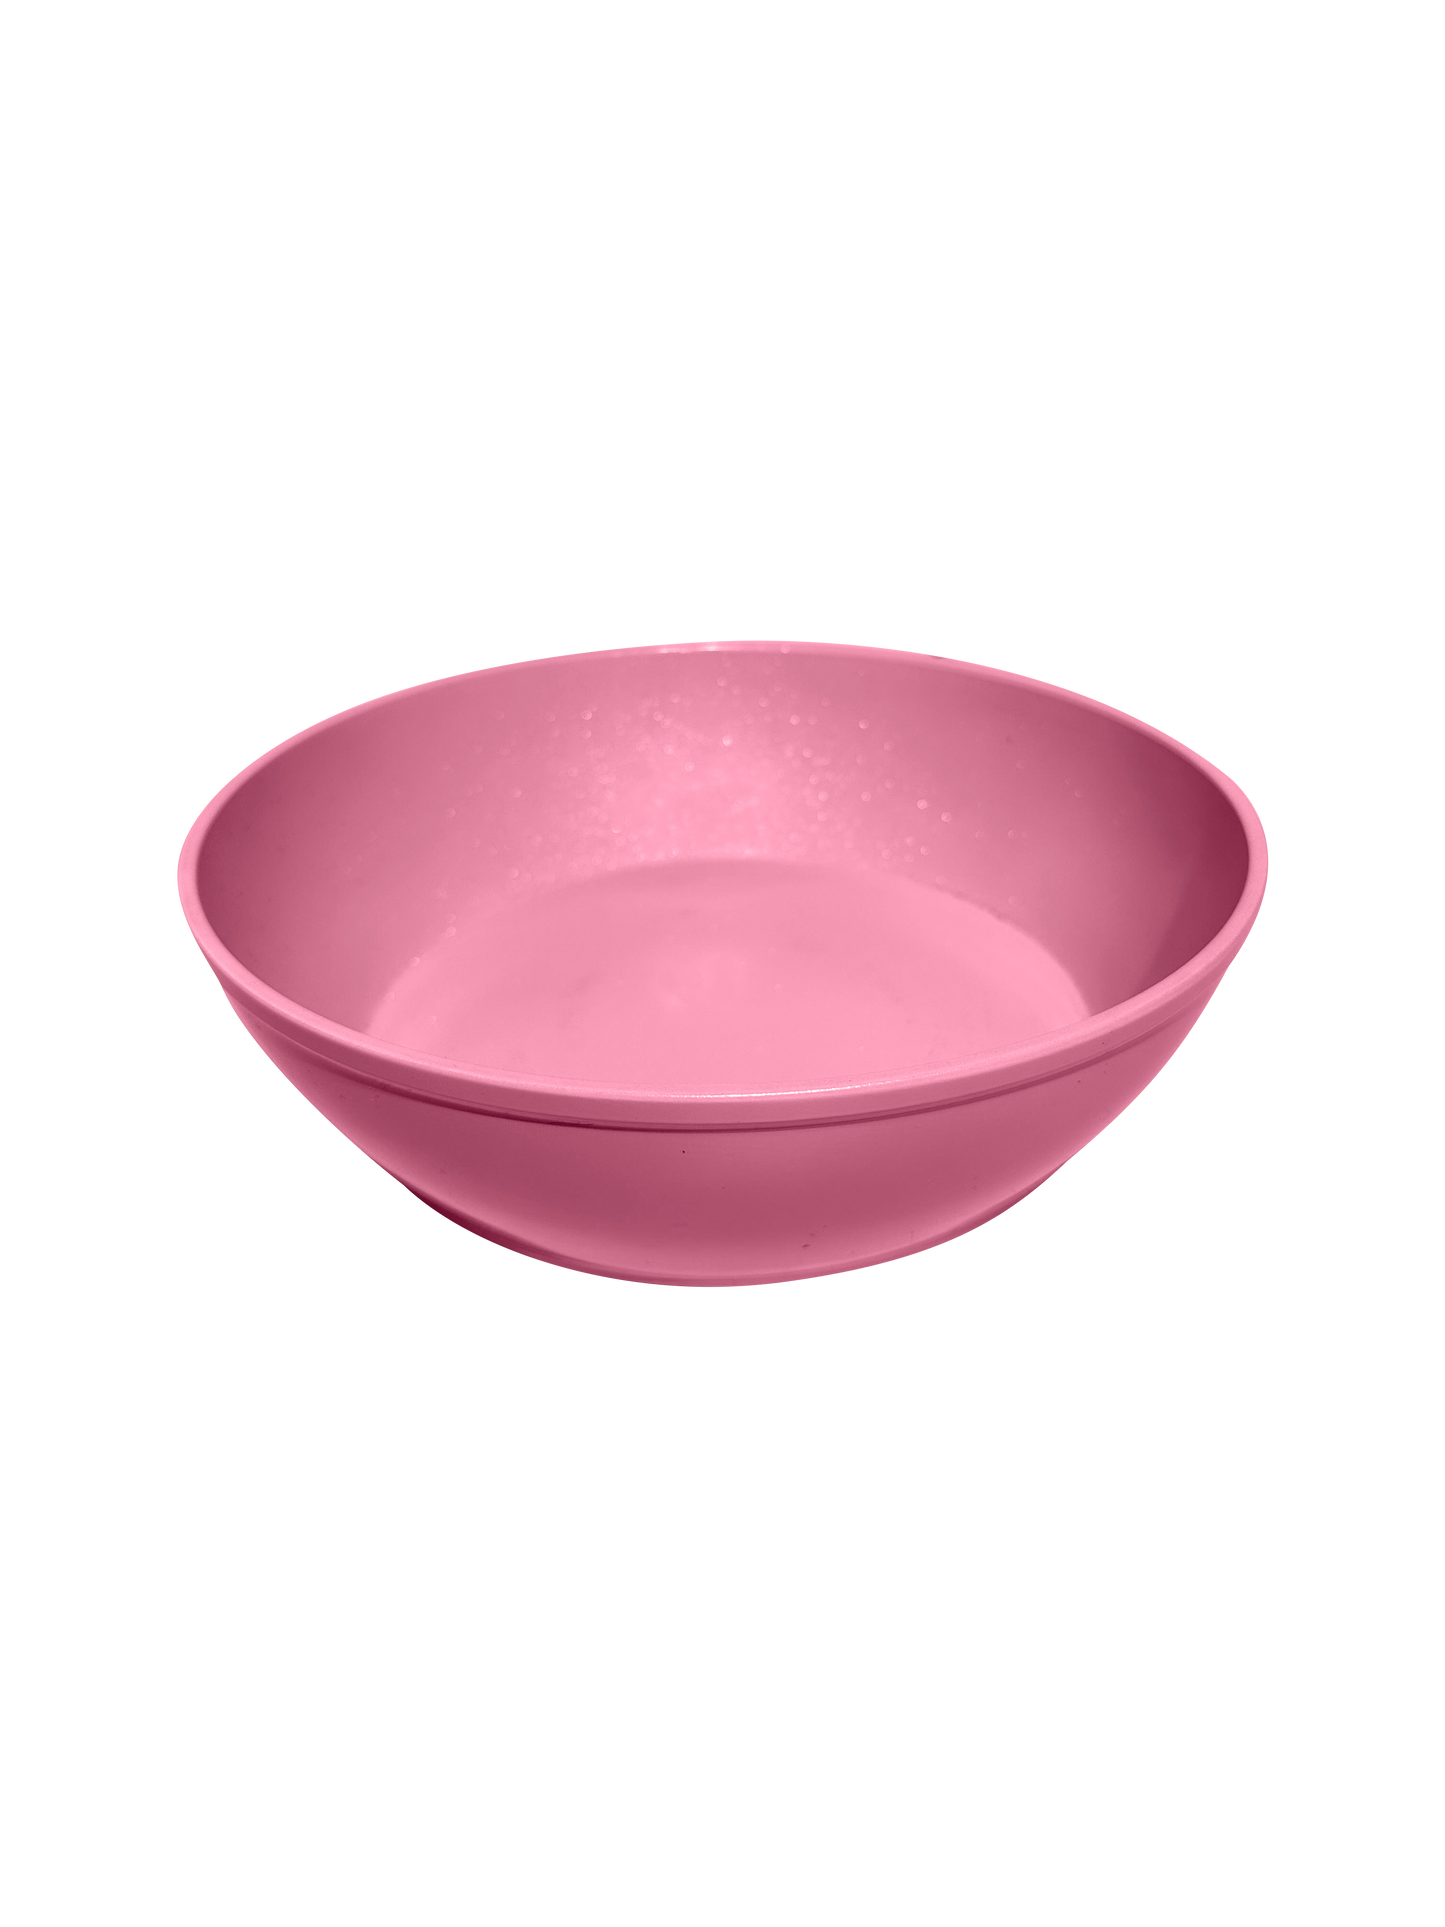 [PRE-ORDER] JOY Cookware Set